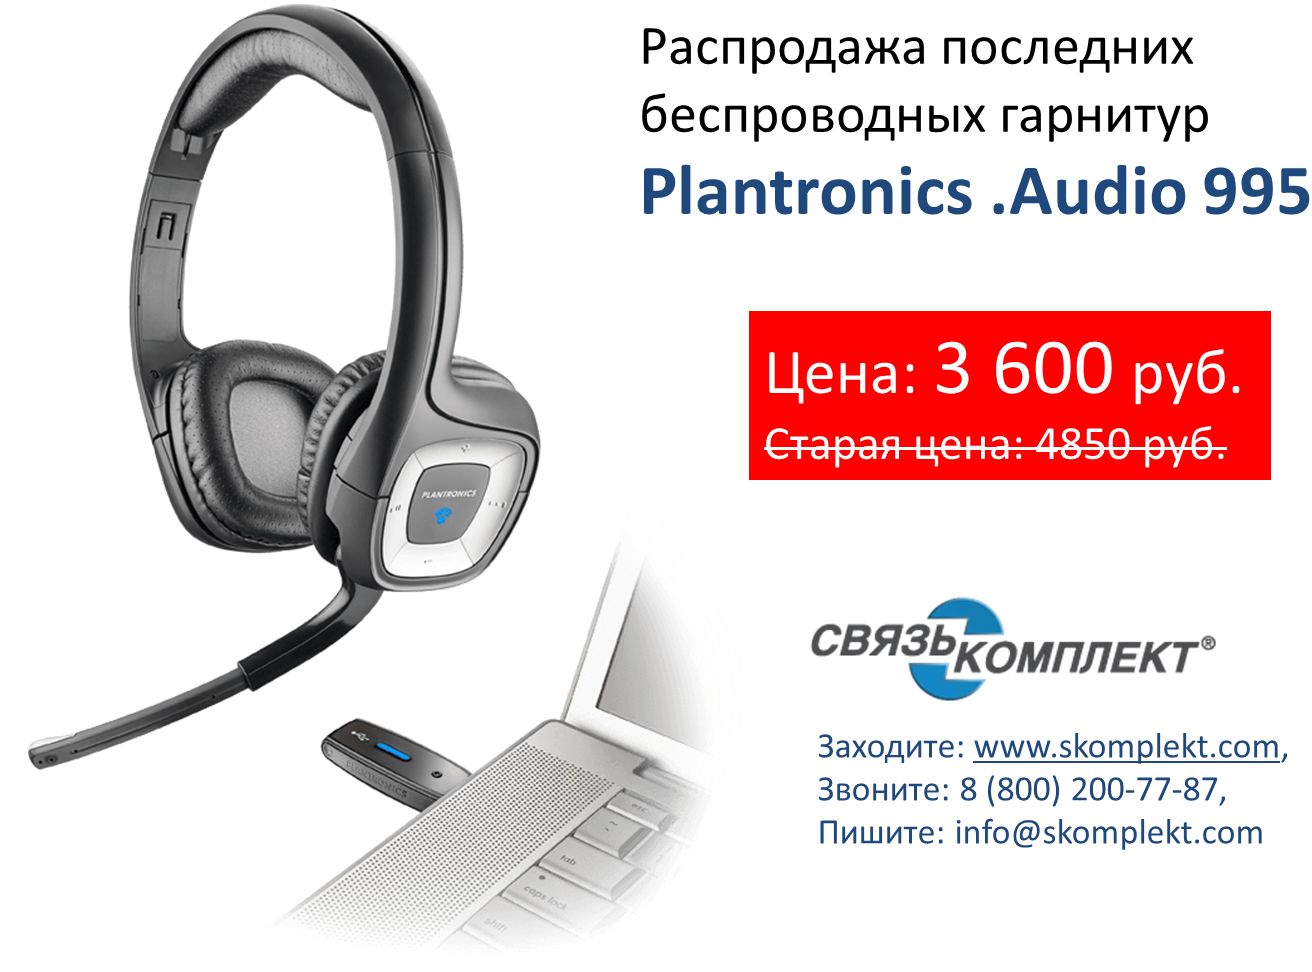 Распродажа последних гарнитур Plantronics .Audio 995!